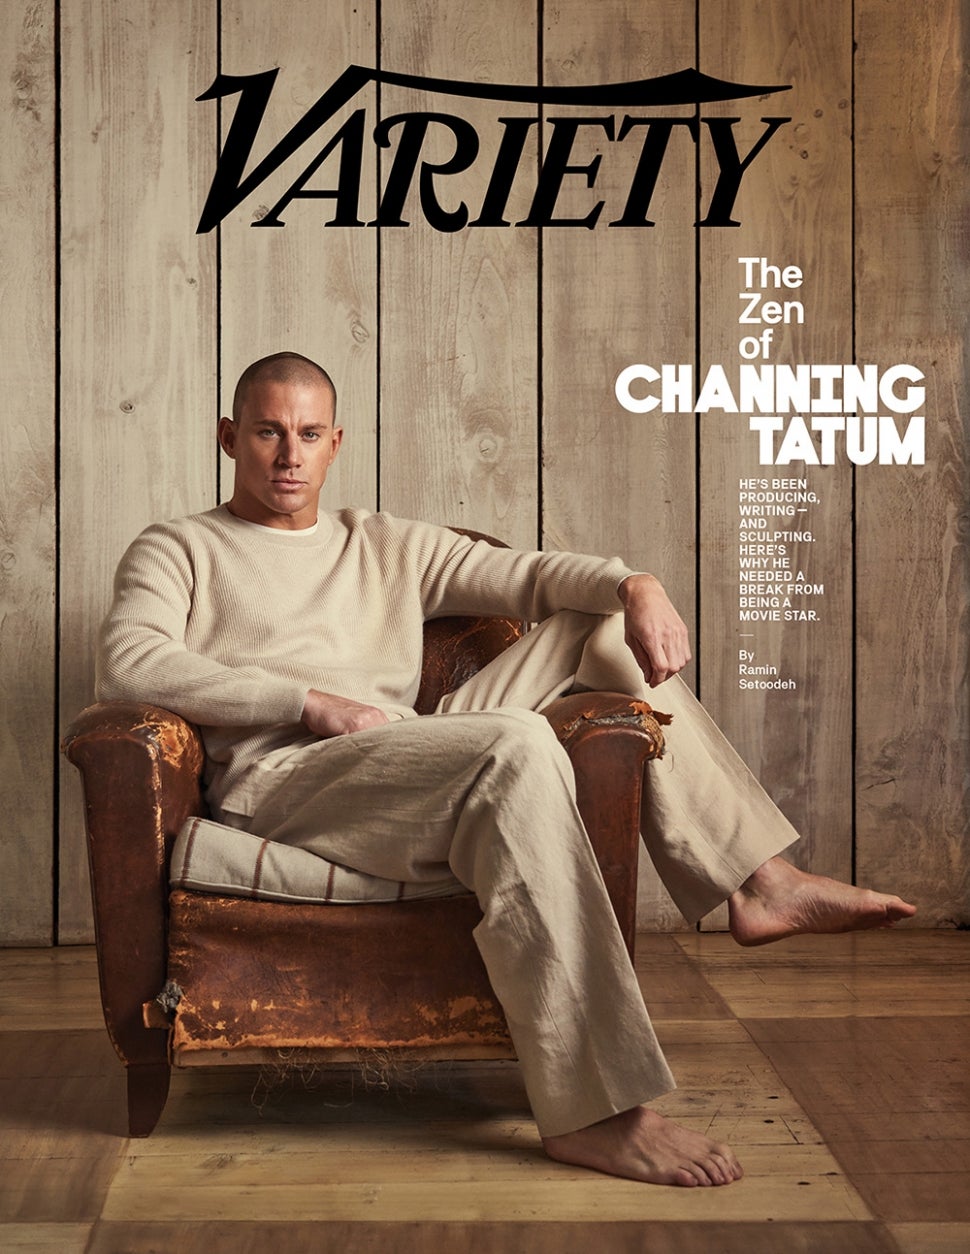 Channing Tatum covers 'Variety'